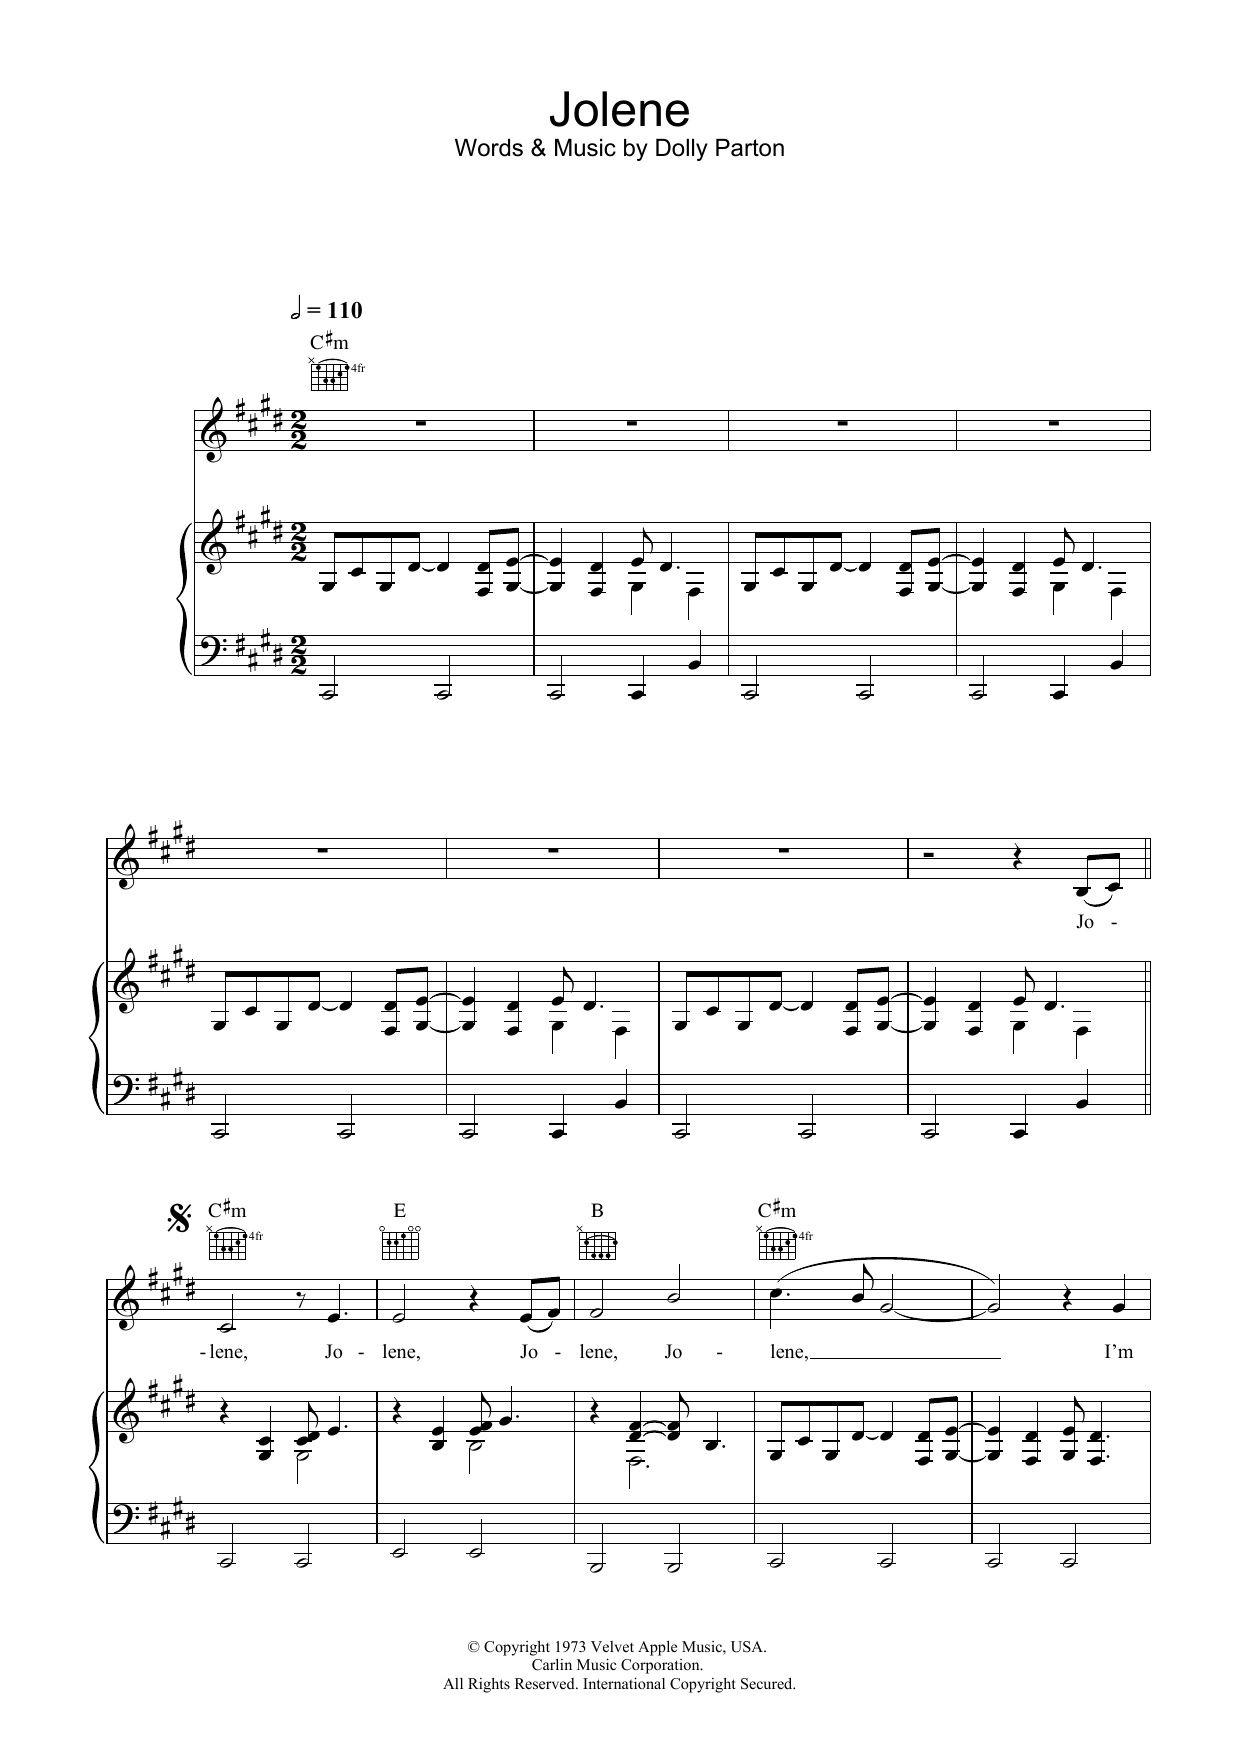 Dolly Parton Jolene Sheet Music Notes & Chords for Ukulele - Download or Print PDF